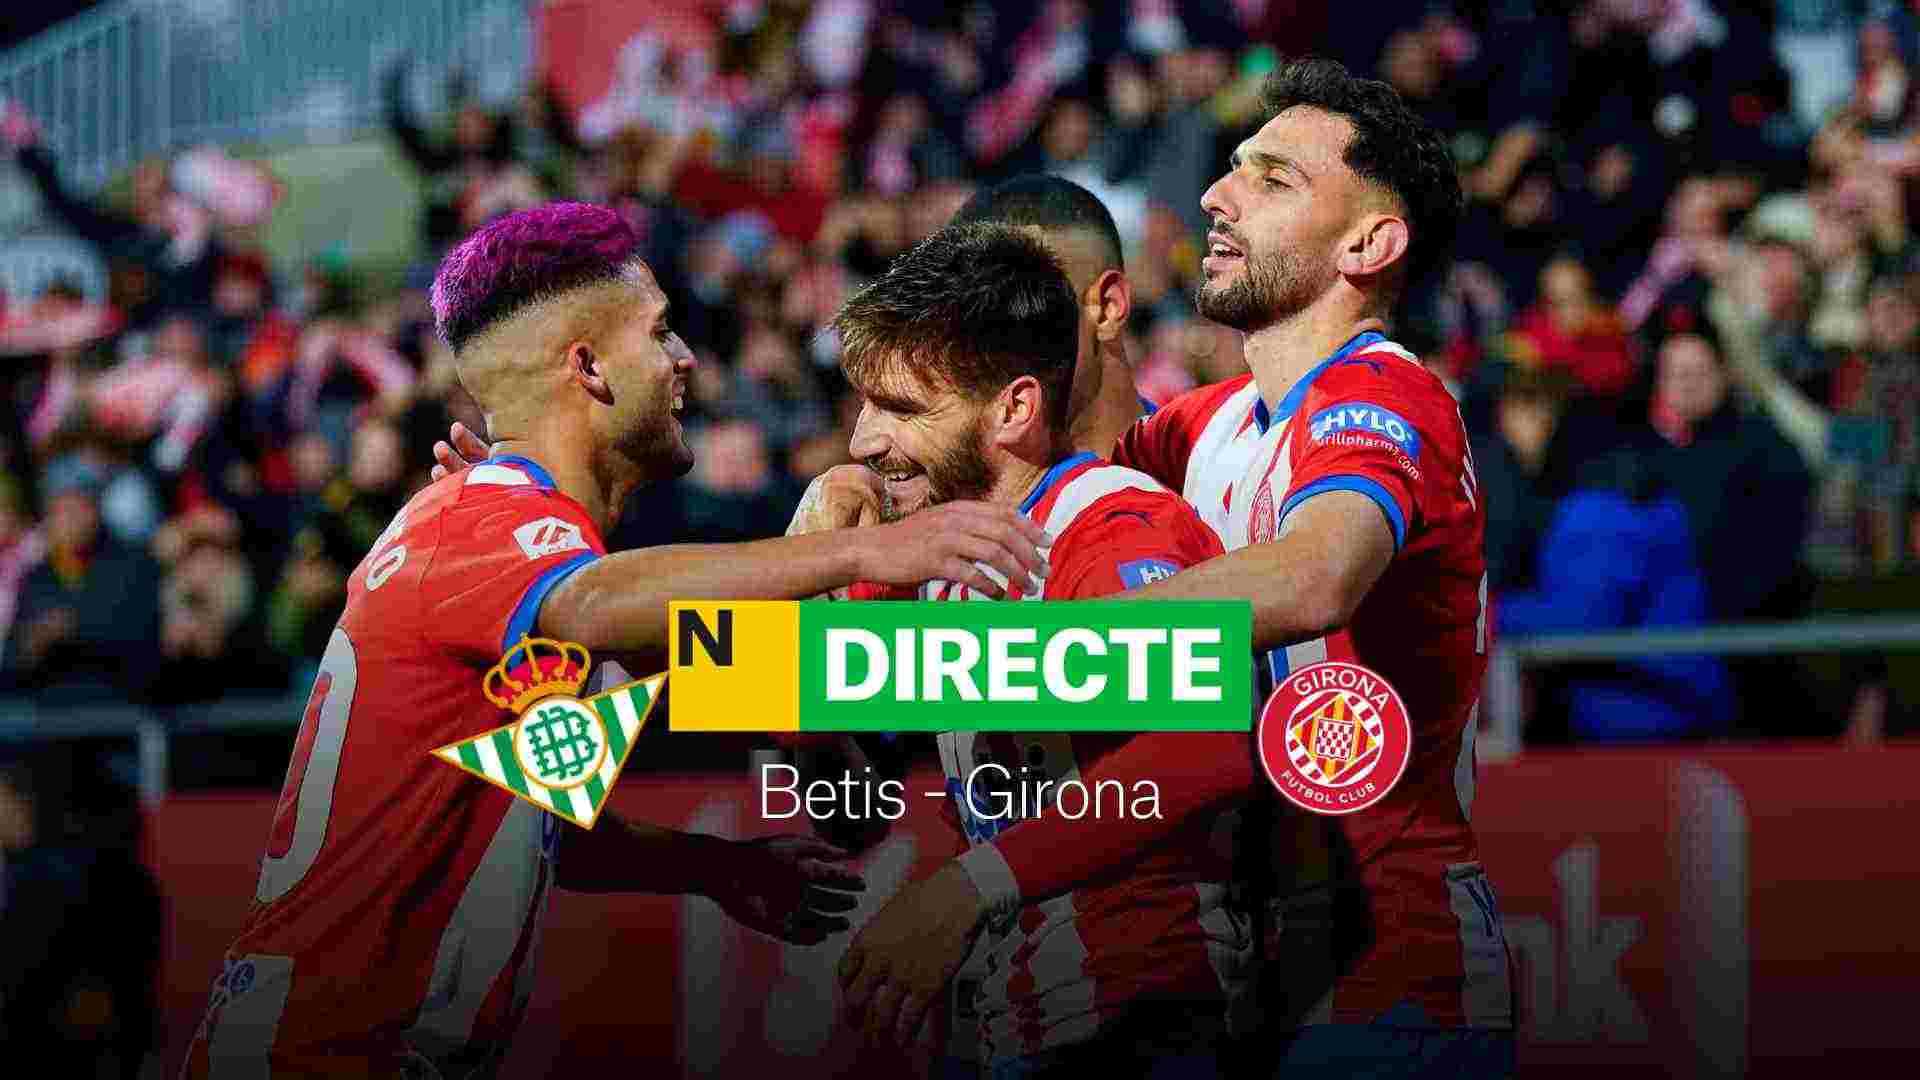 Betis - Girona de LaLiga EA Sports avui, DIRECTE | Resultat, resum i gols